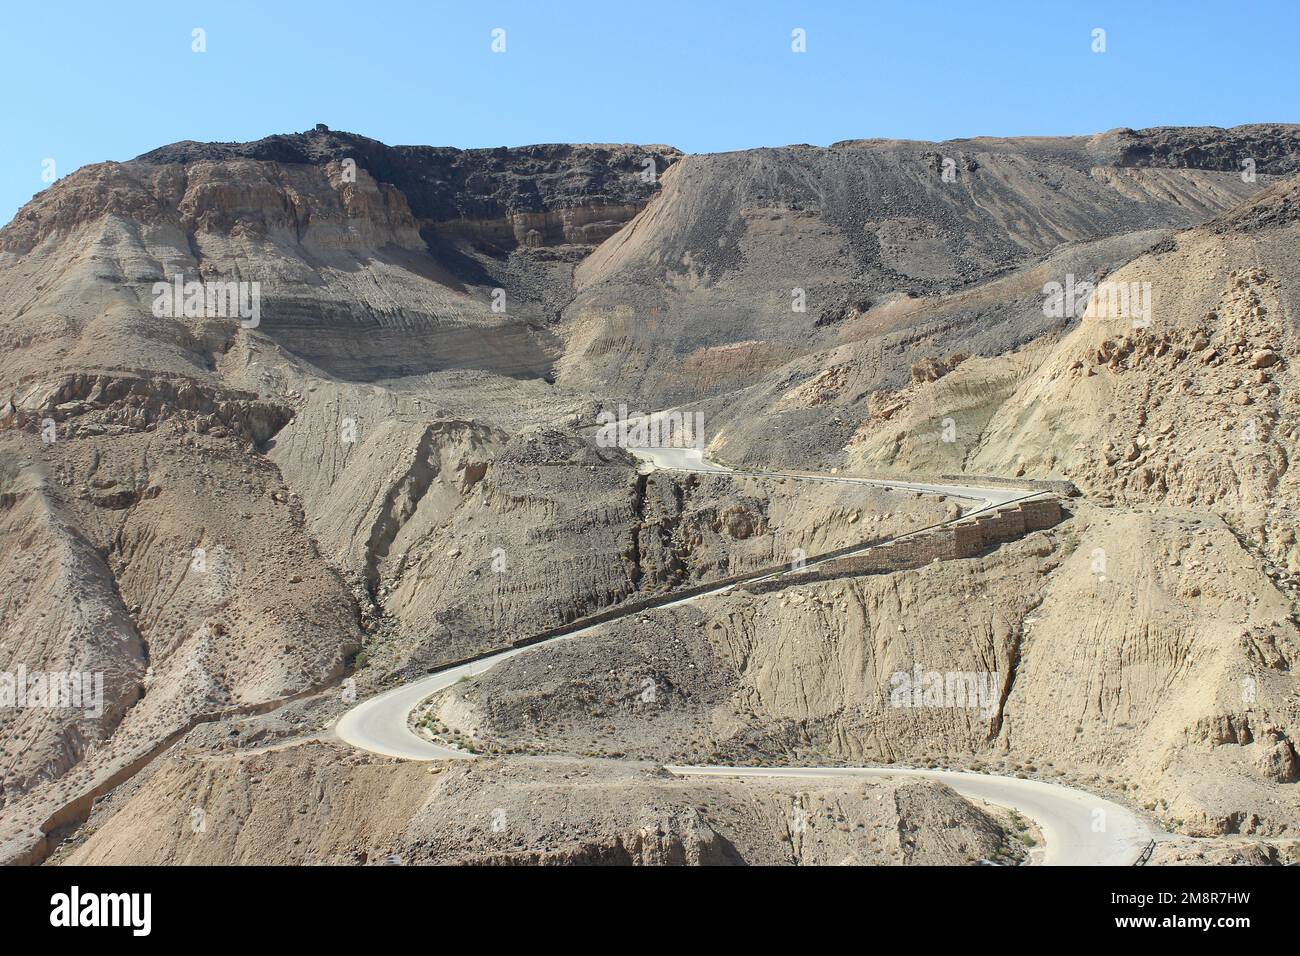 Jordan - gewundene Wüstenstraße des Kings Highway, die in den Wadi Mujib Canyon führt Stockfoto